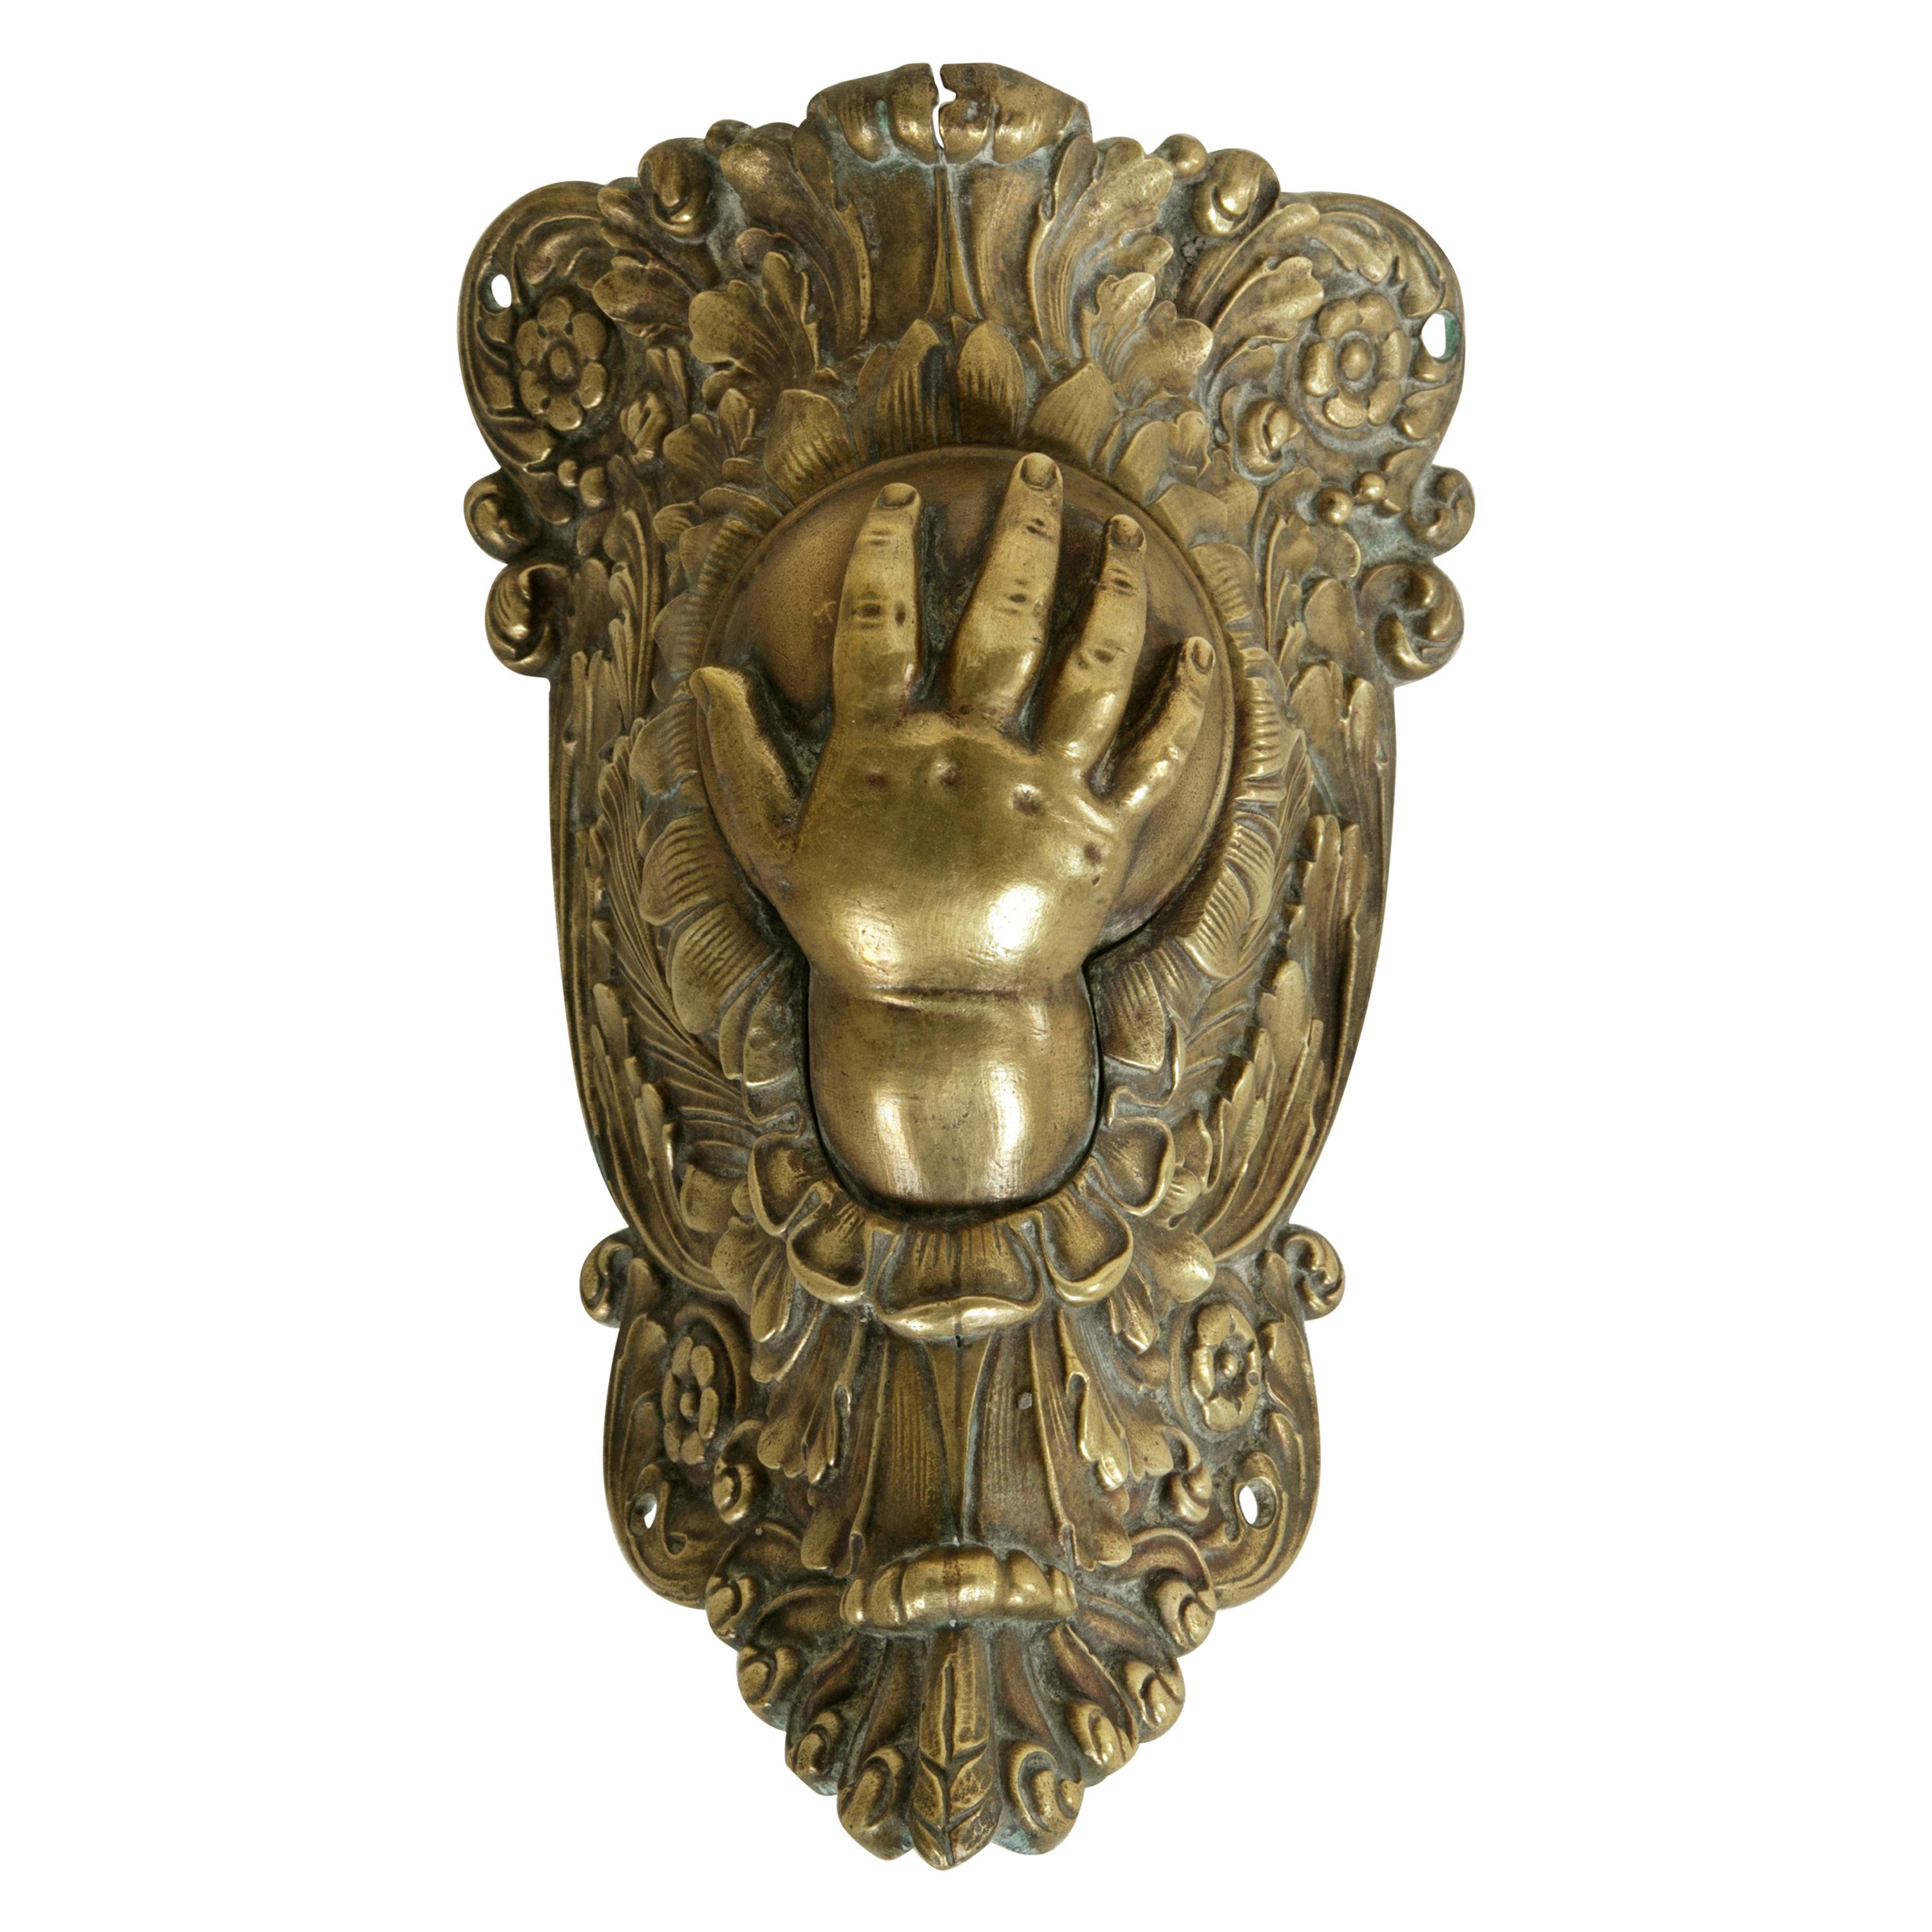 19th Century French Napoleon III Period Bronze Billiard Corner Pocket with Hand